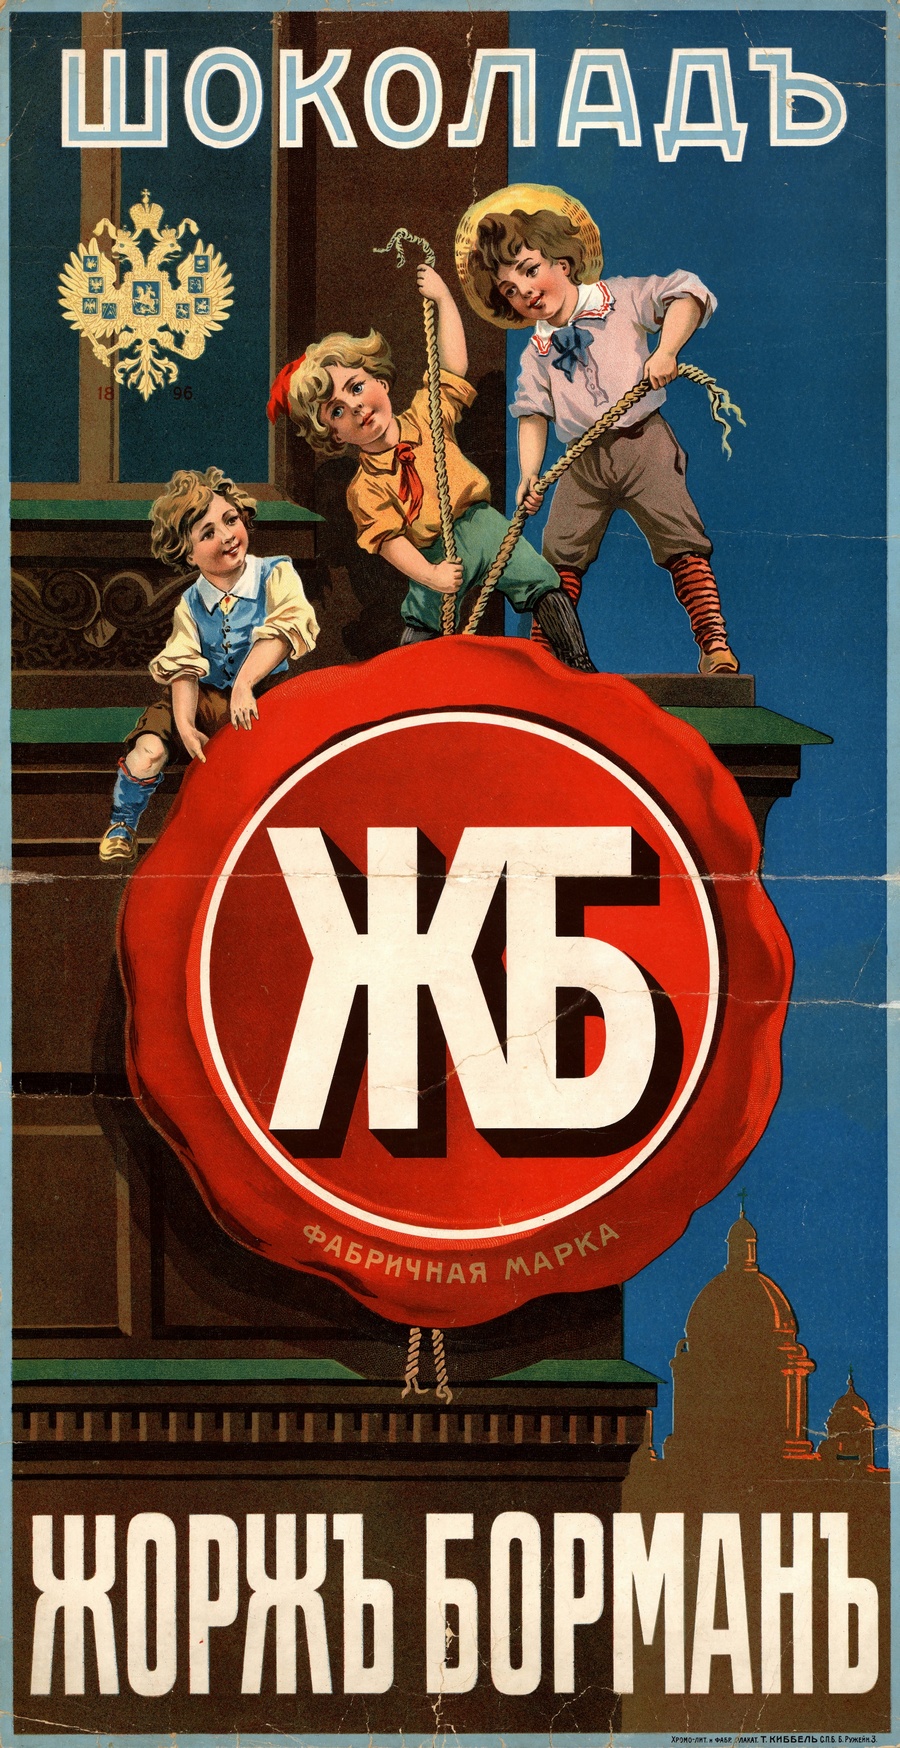 Рекламный плакат компании «Жорж Борман». Начало 20 века. Источник: РГБ